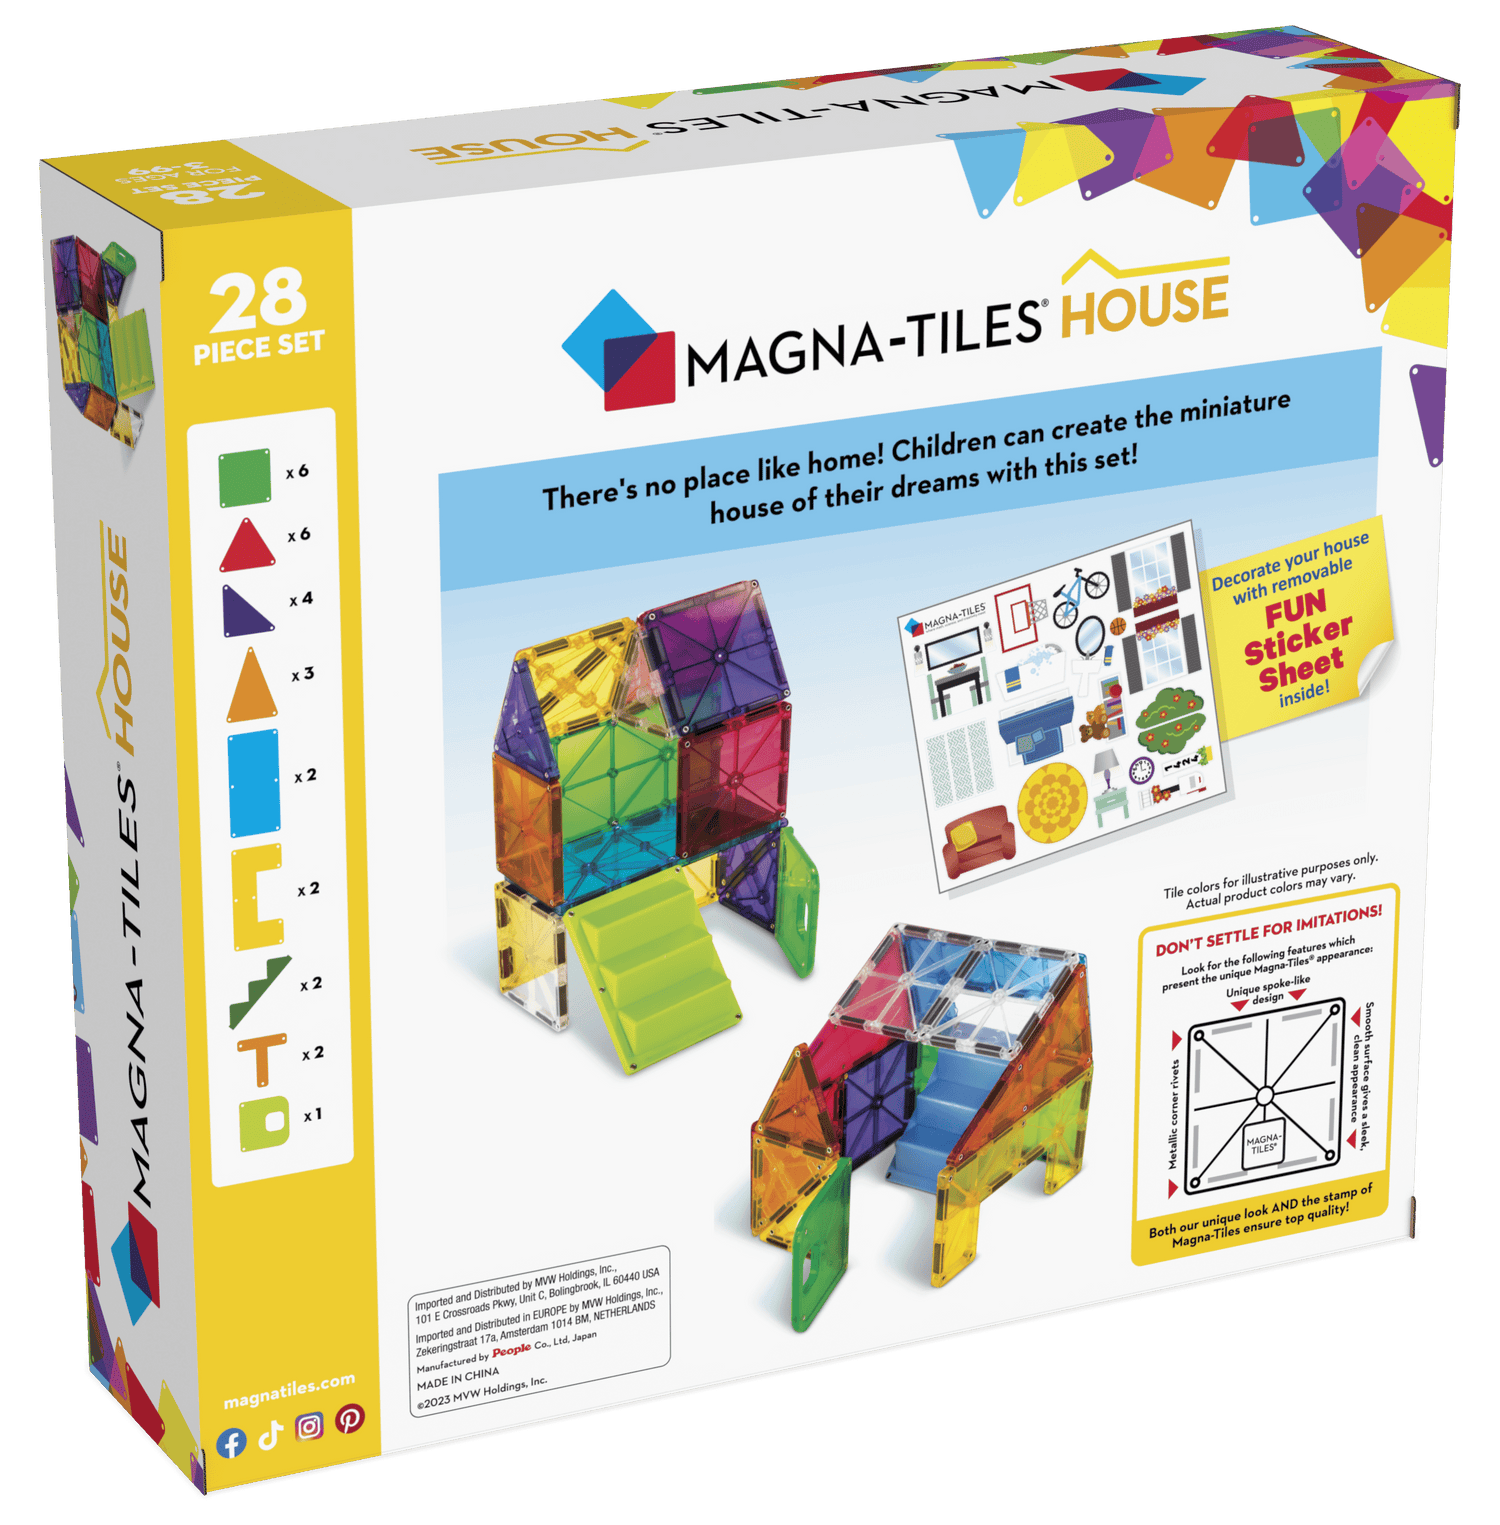 MAGNA-TILES | HOUSE - 28 PIECE SET by MAGNA-TILES - The Playful Collective